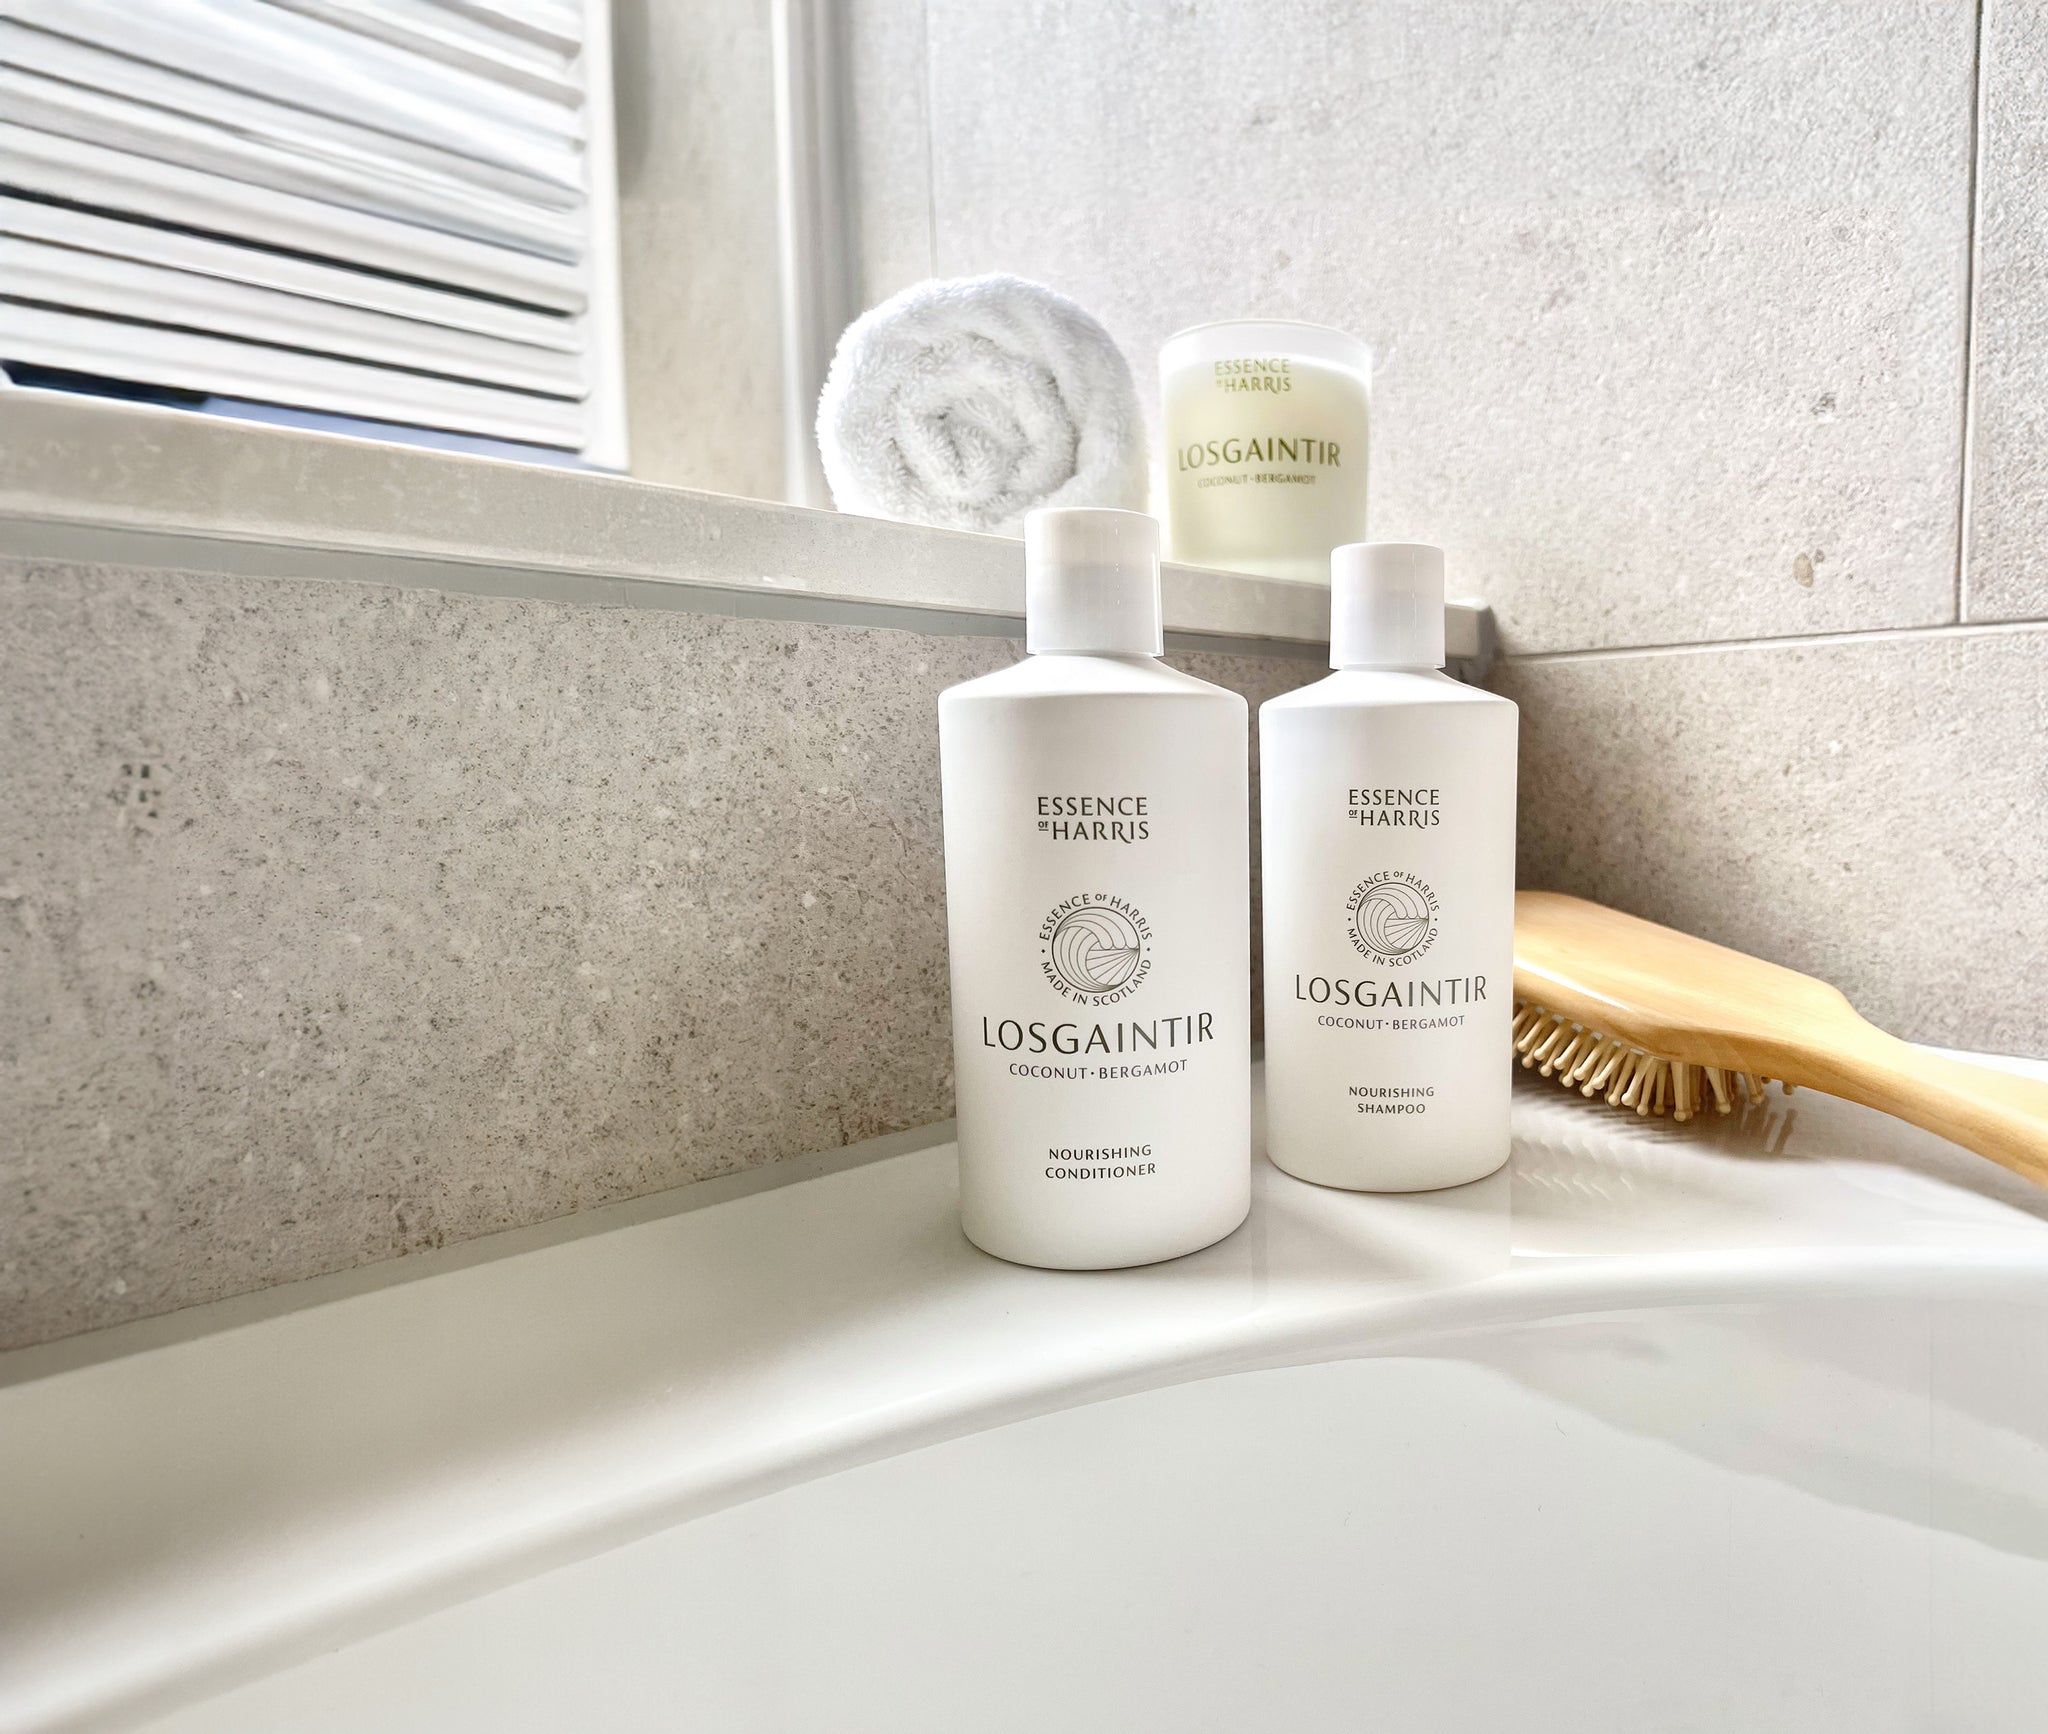 Losgaintir, shampoo and conditioner set on a bath tub with a wooden hair brush